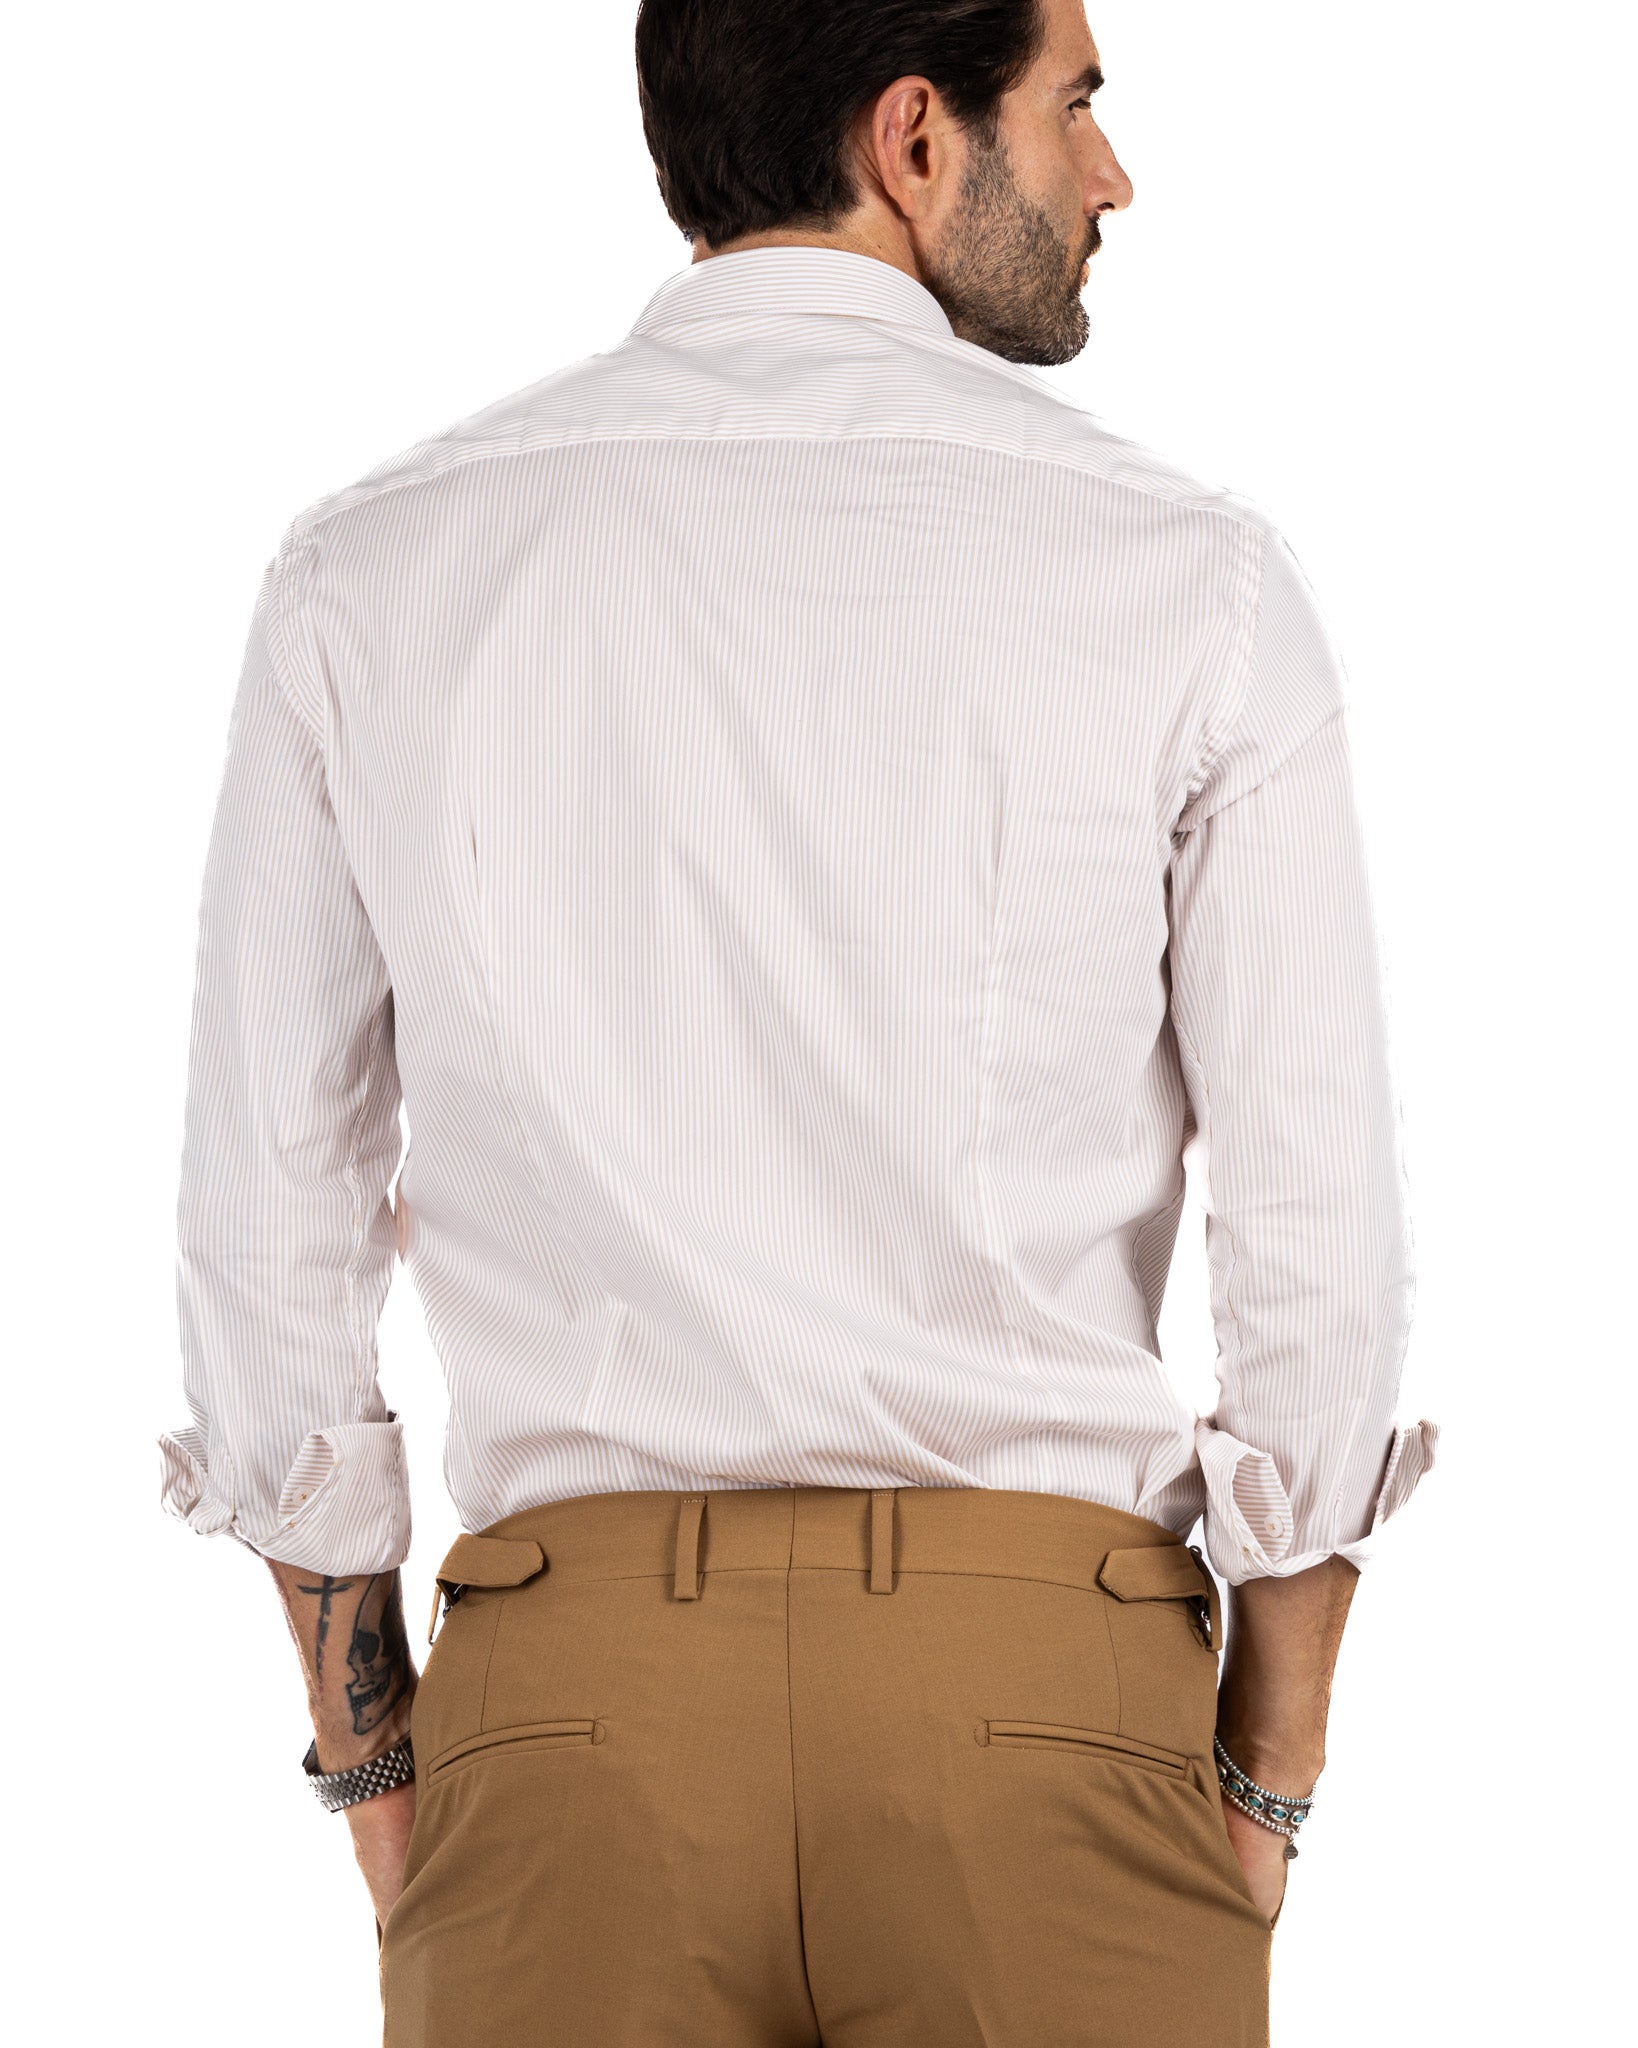 Shirt - classic basic beige narrow stripe in cotton